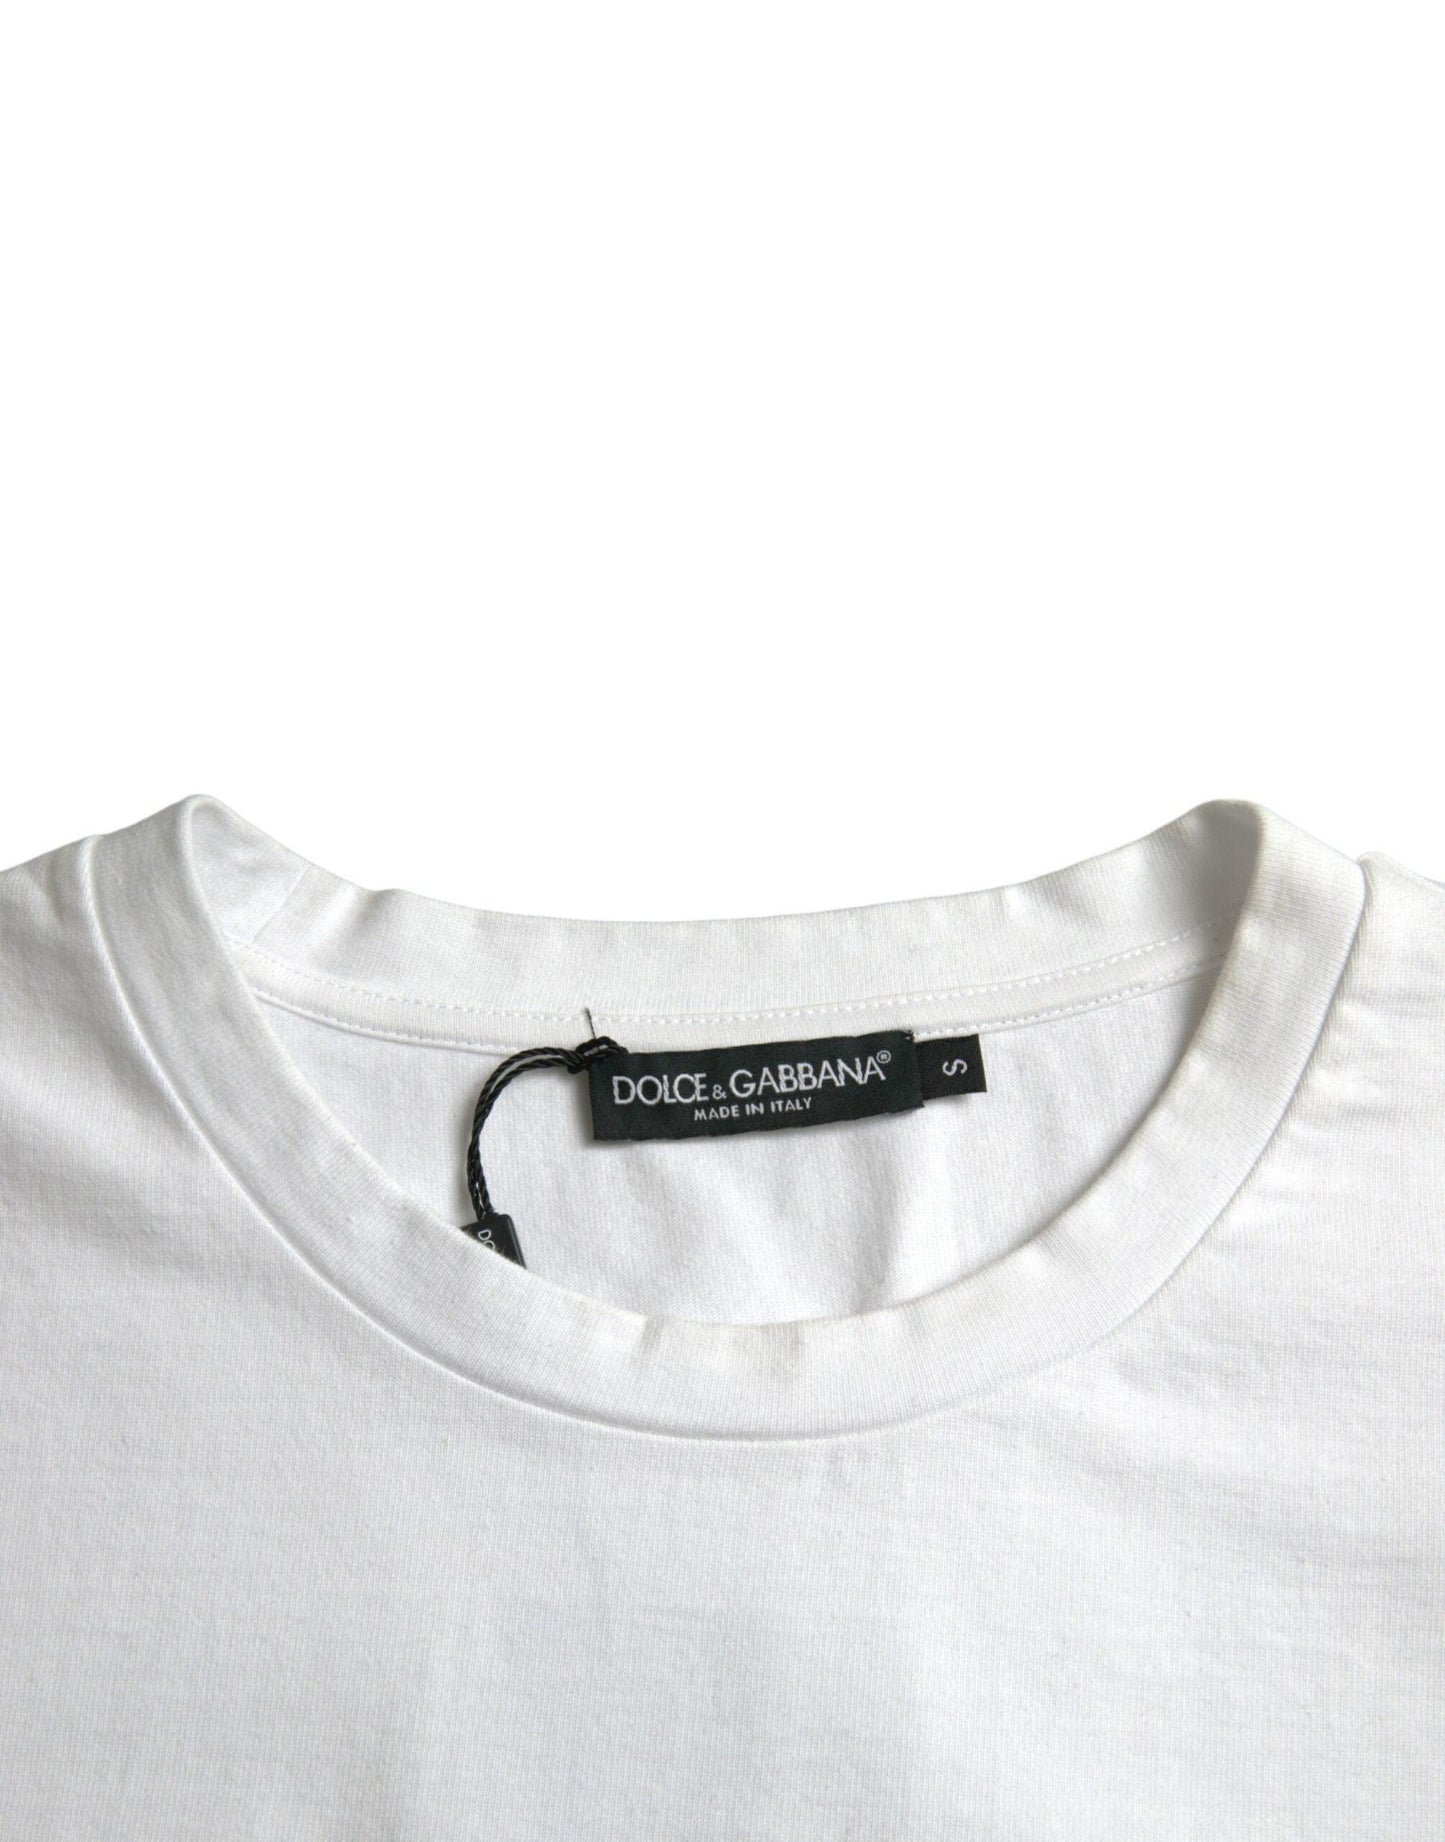 Dolce & Gabbana White Amor Heart Cotton Crewneck Short Sleeve T-shirt - PER.FASHION